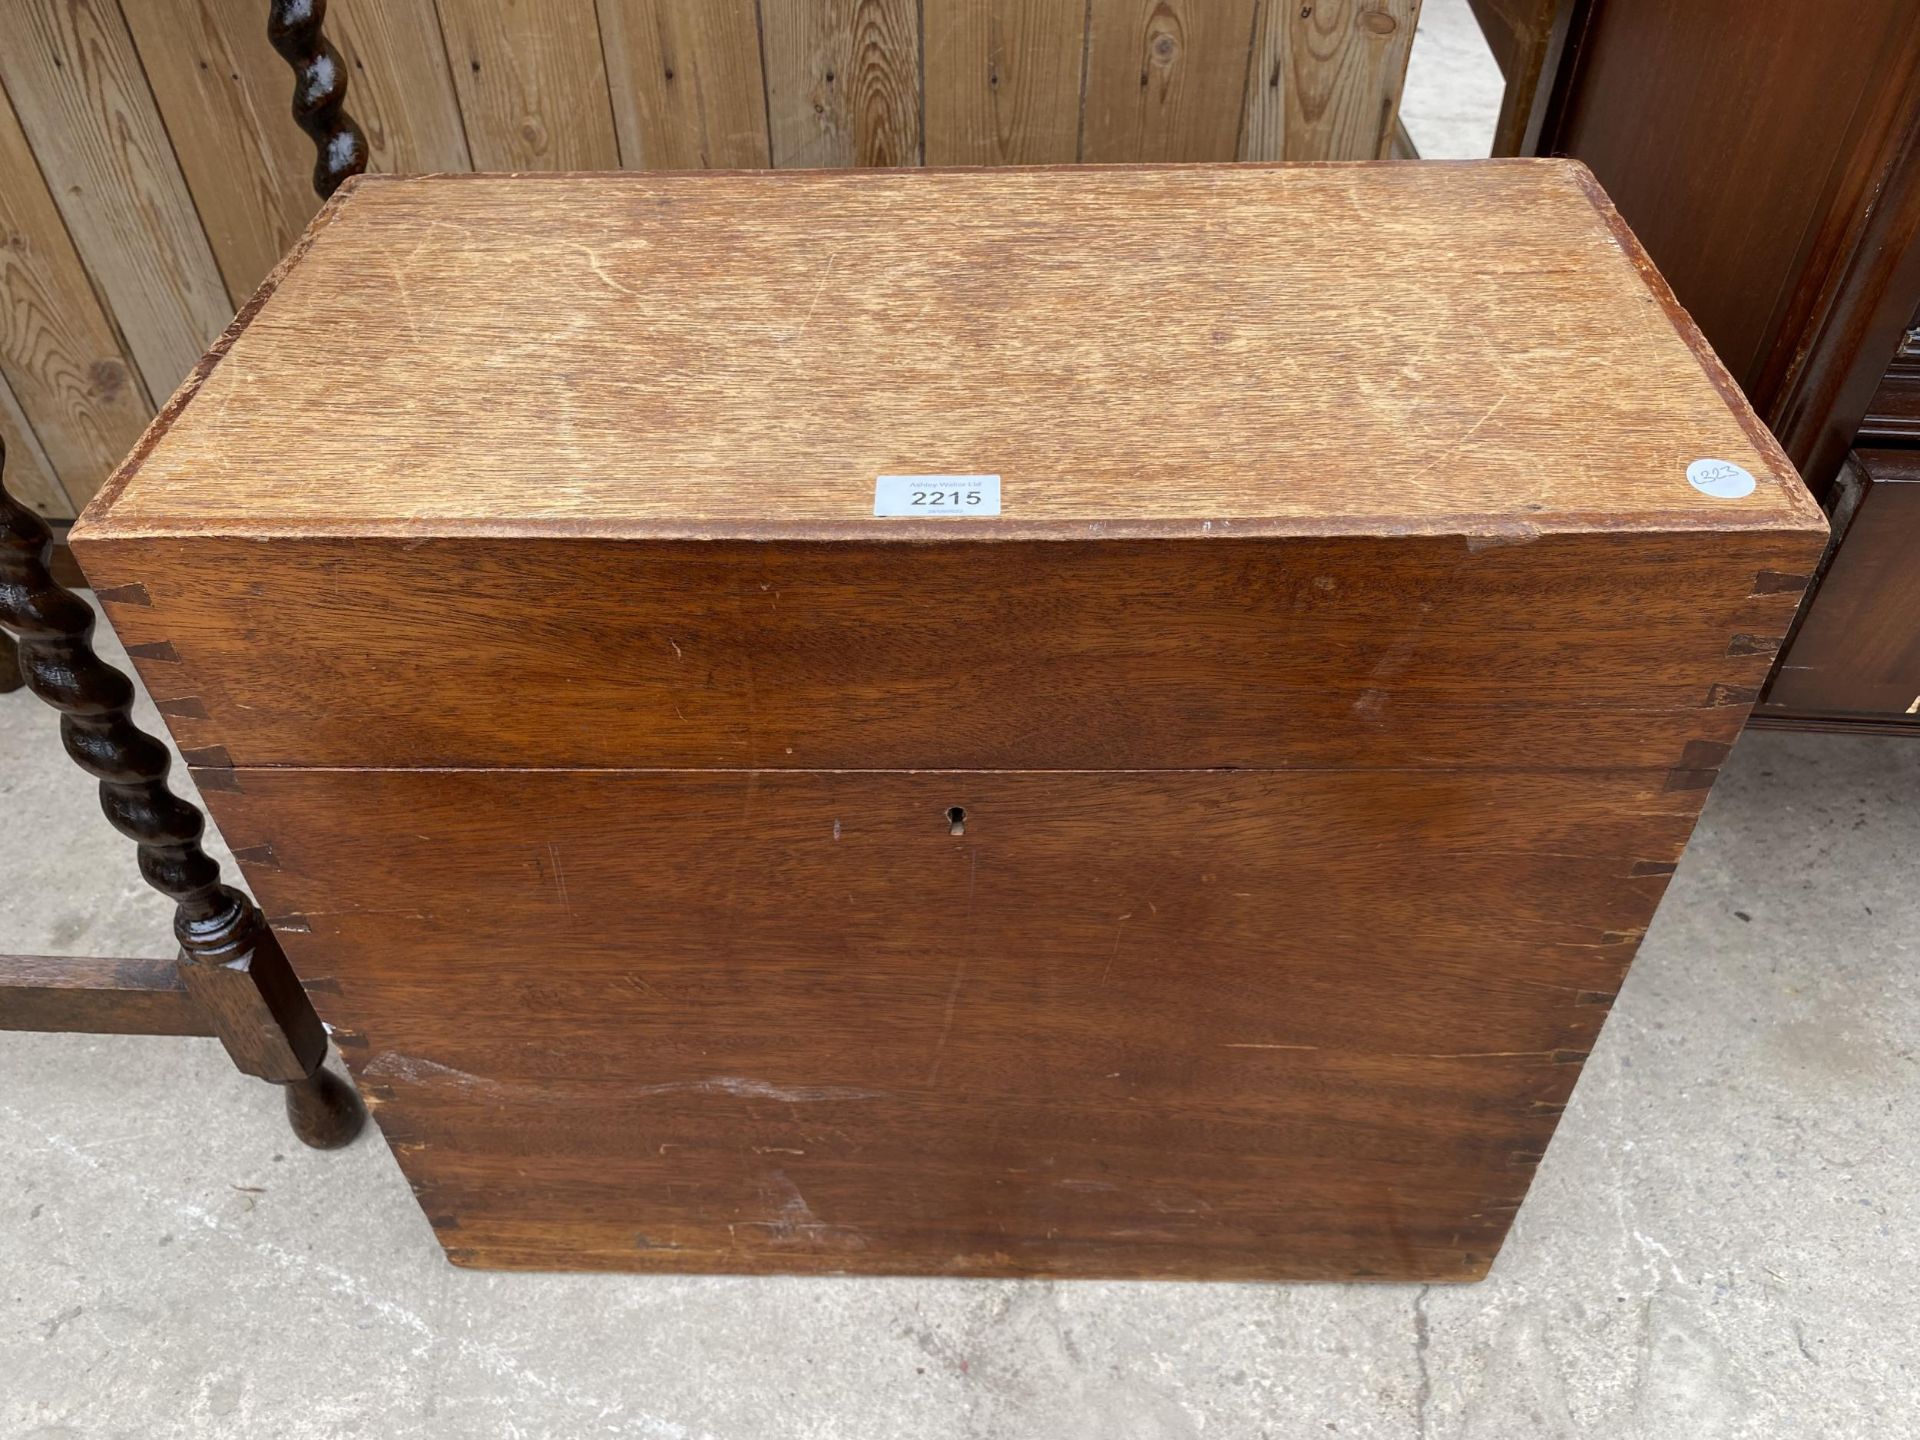 A 19TH CENTURY MAHOGANY STORAGE BOX, 20.5" WIDE